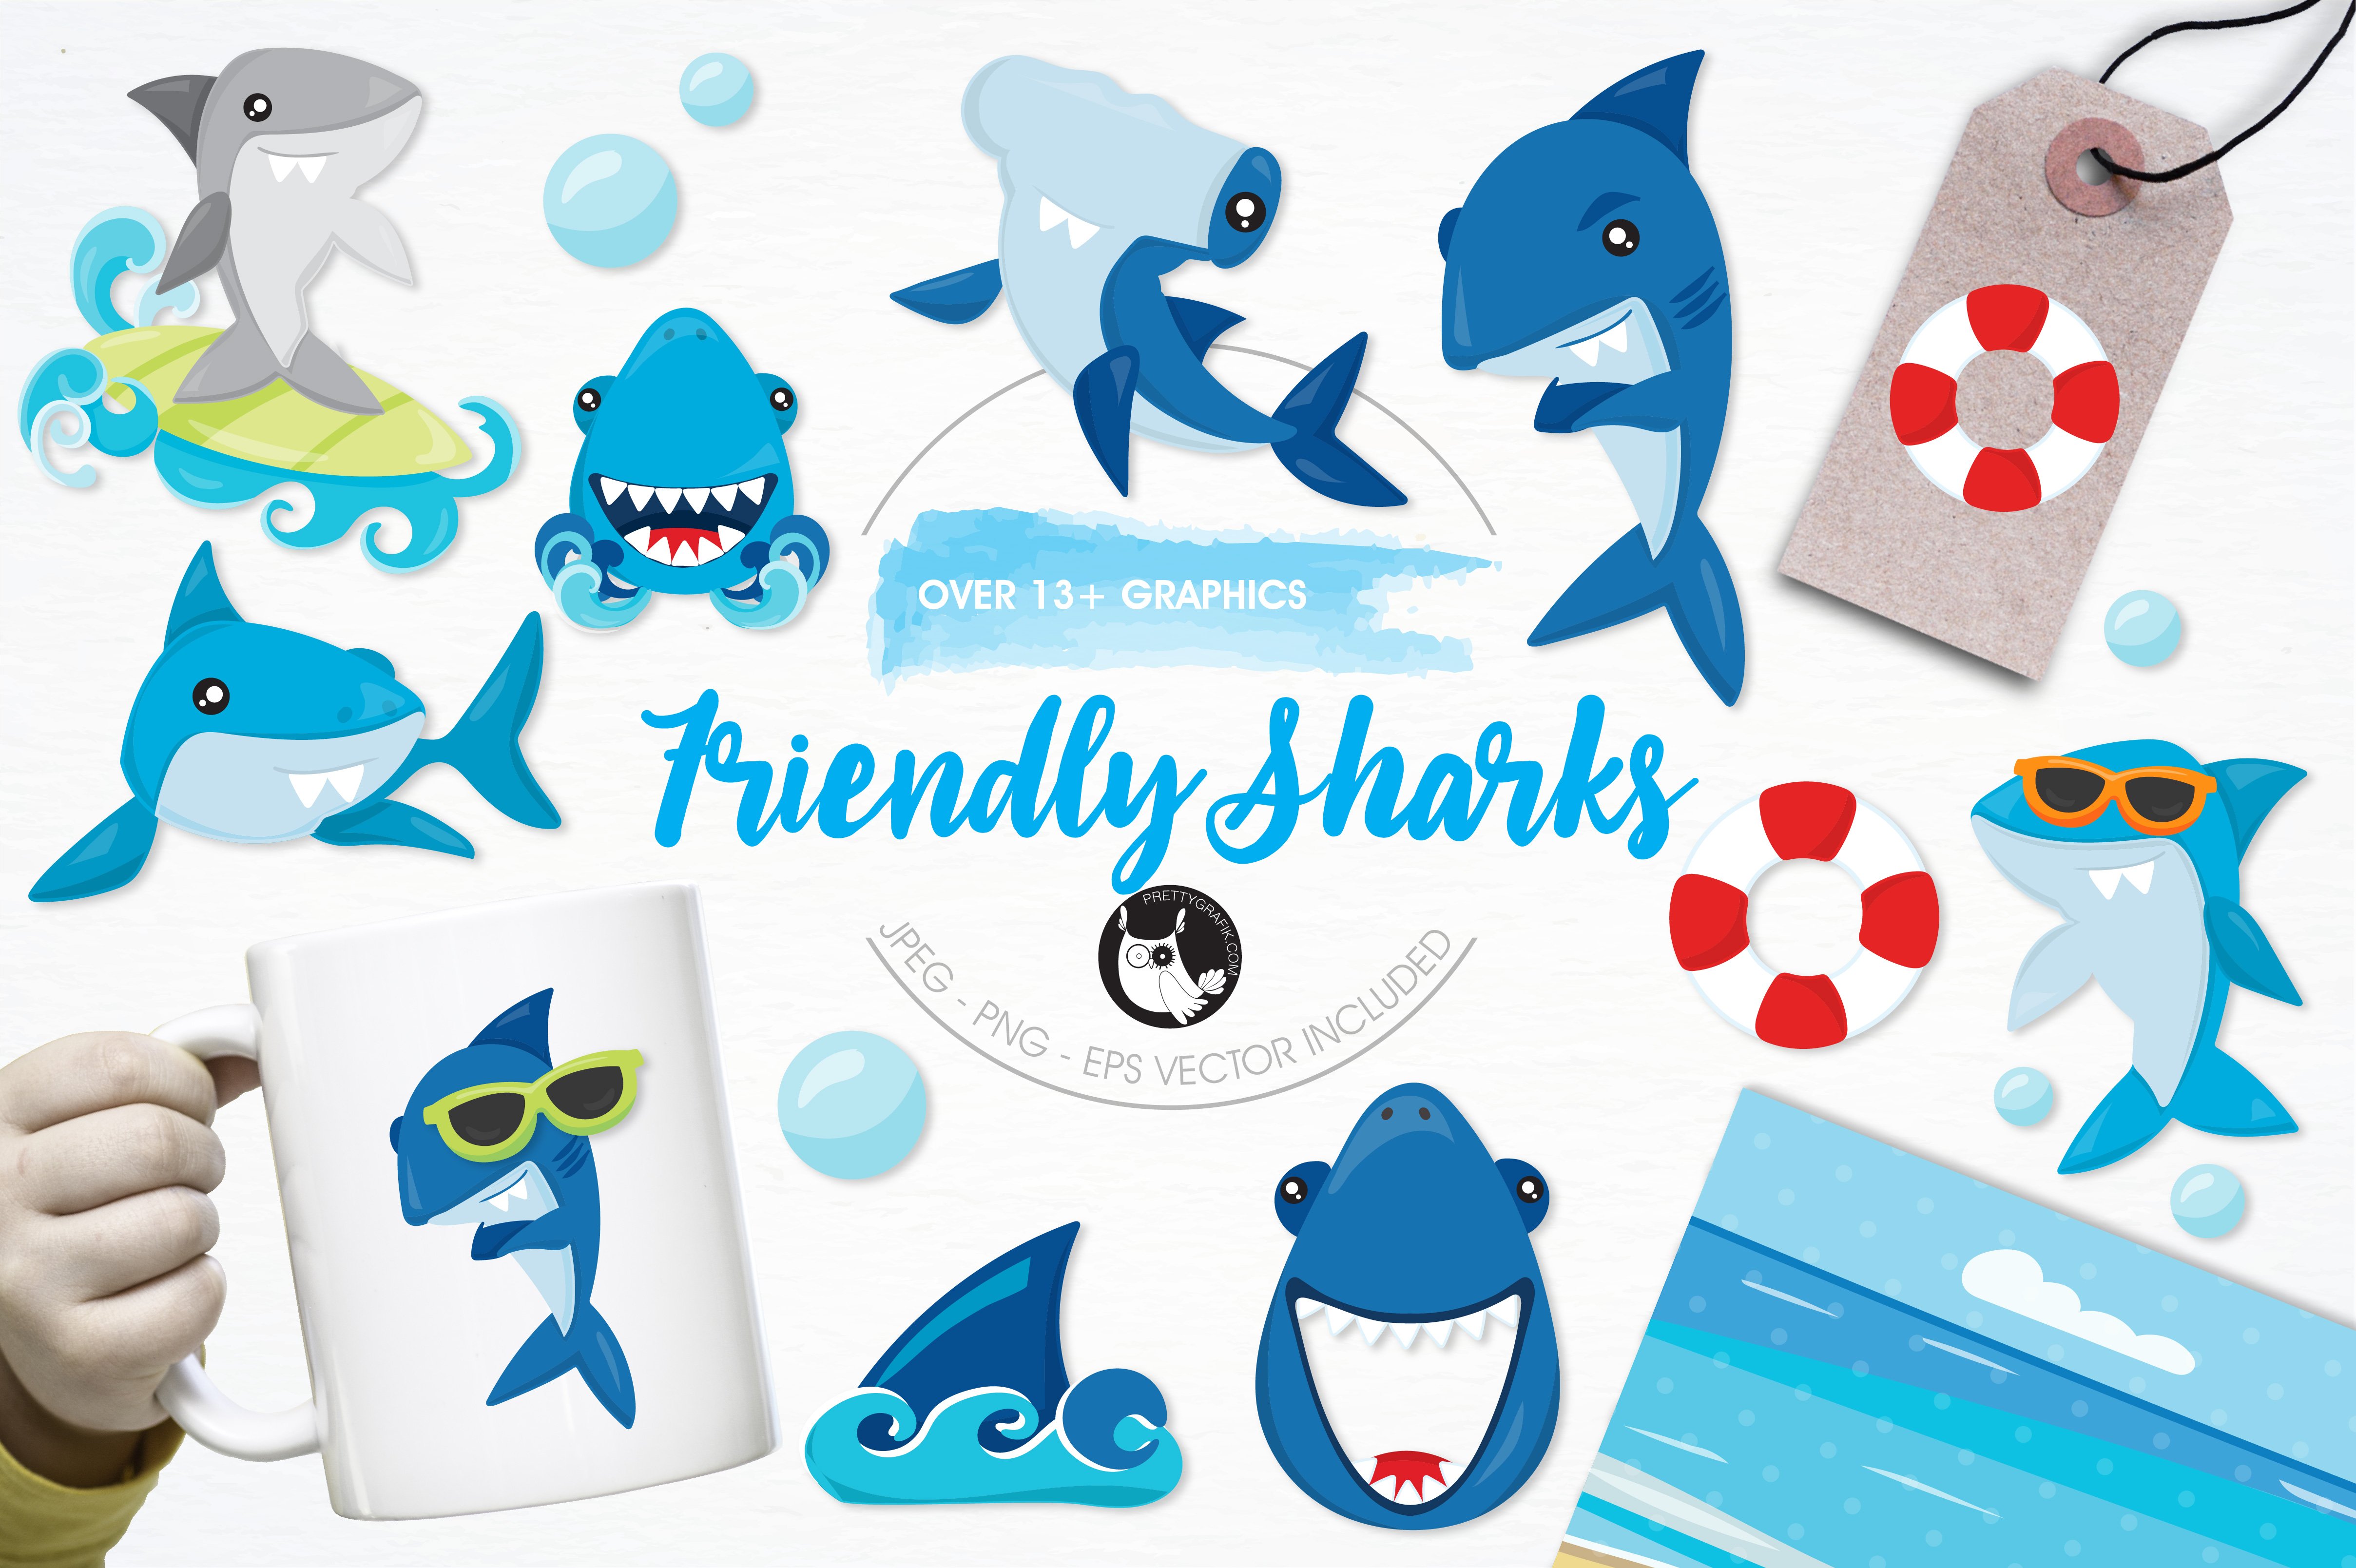 Friendly sharks illustration pack - Vector Image